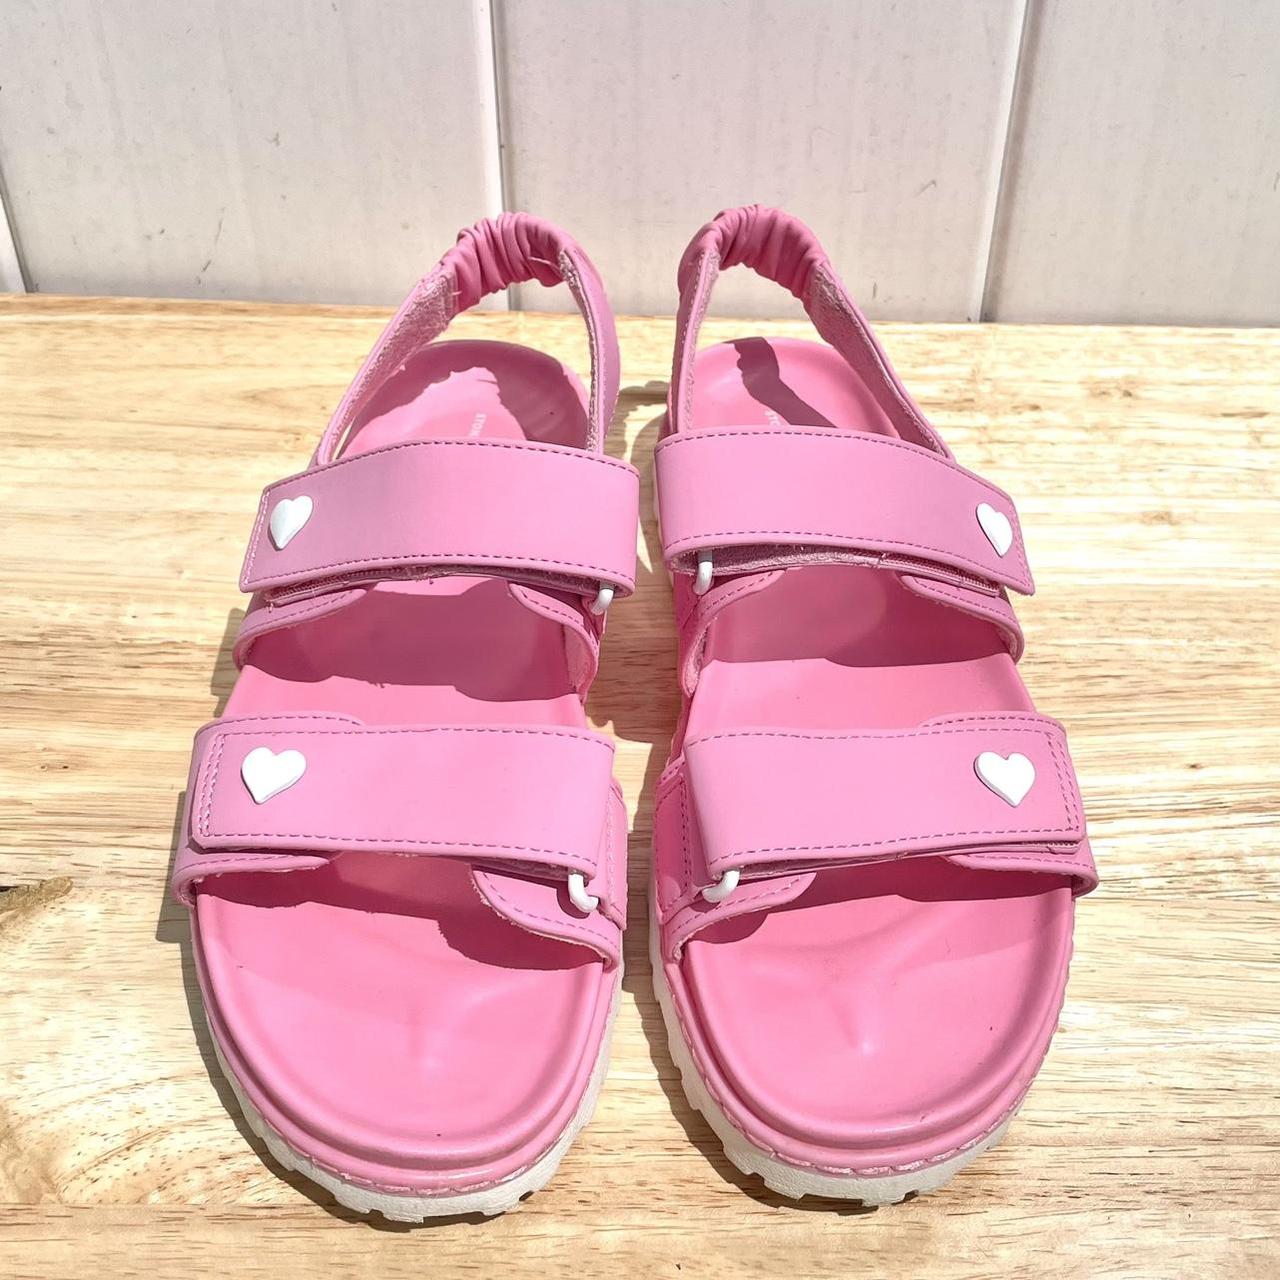 Stoney Clover Lane Women's Pink and White Sandals | Depop